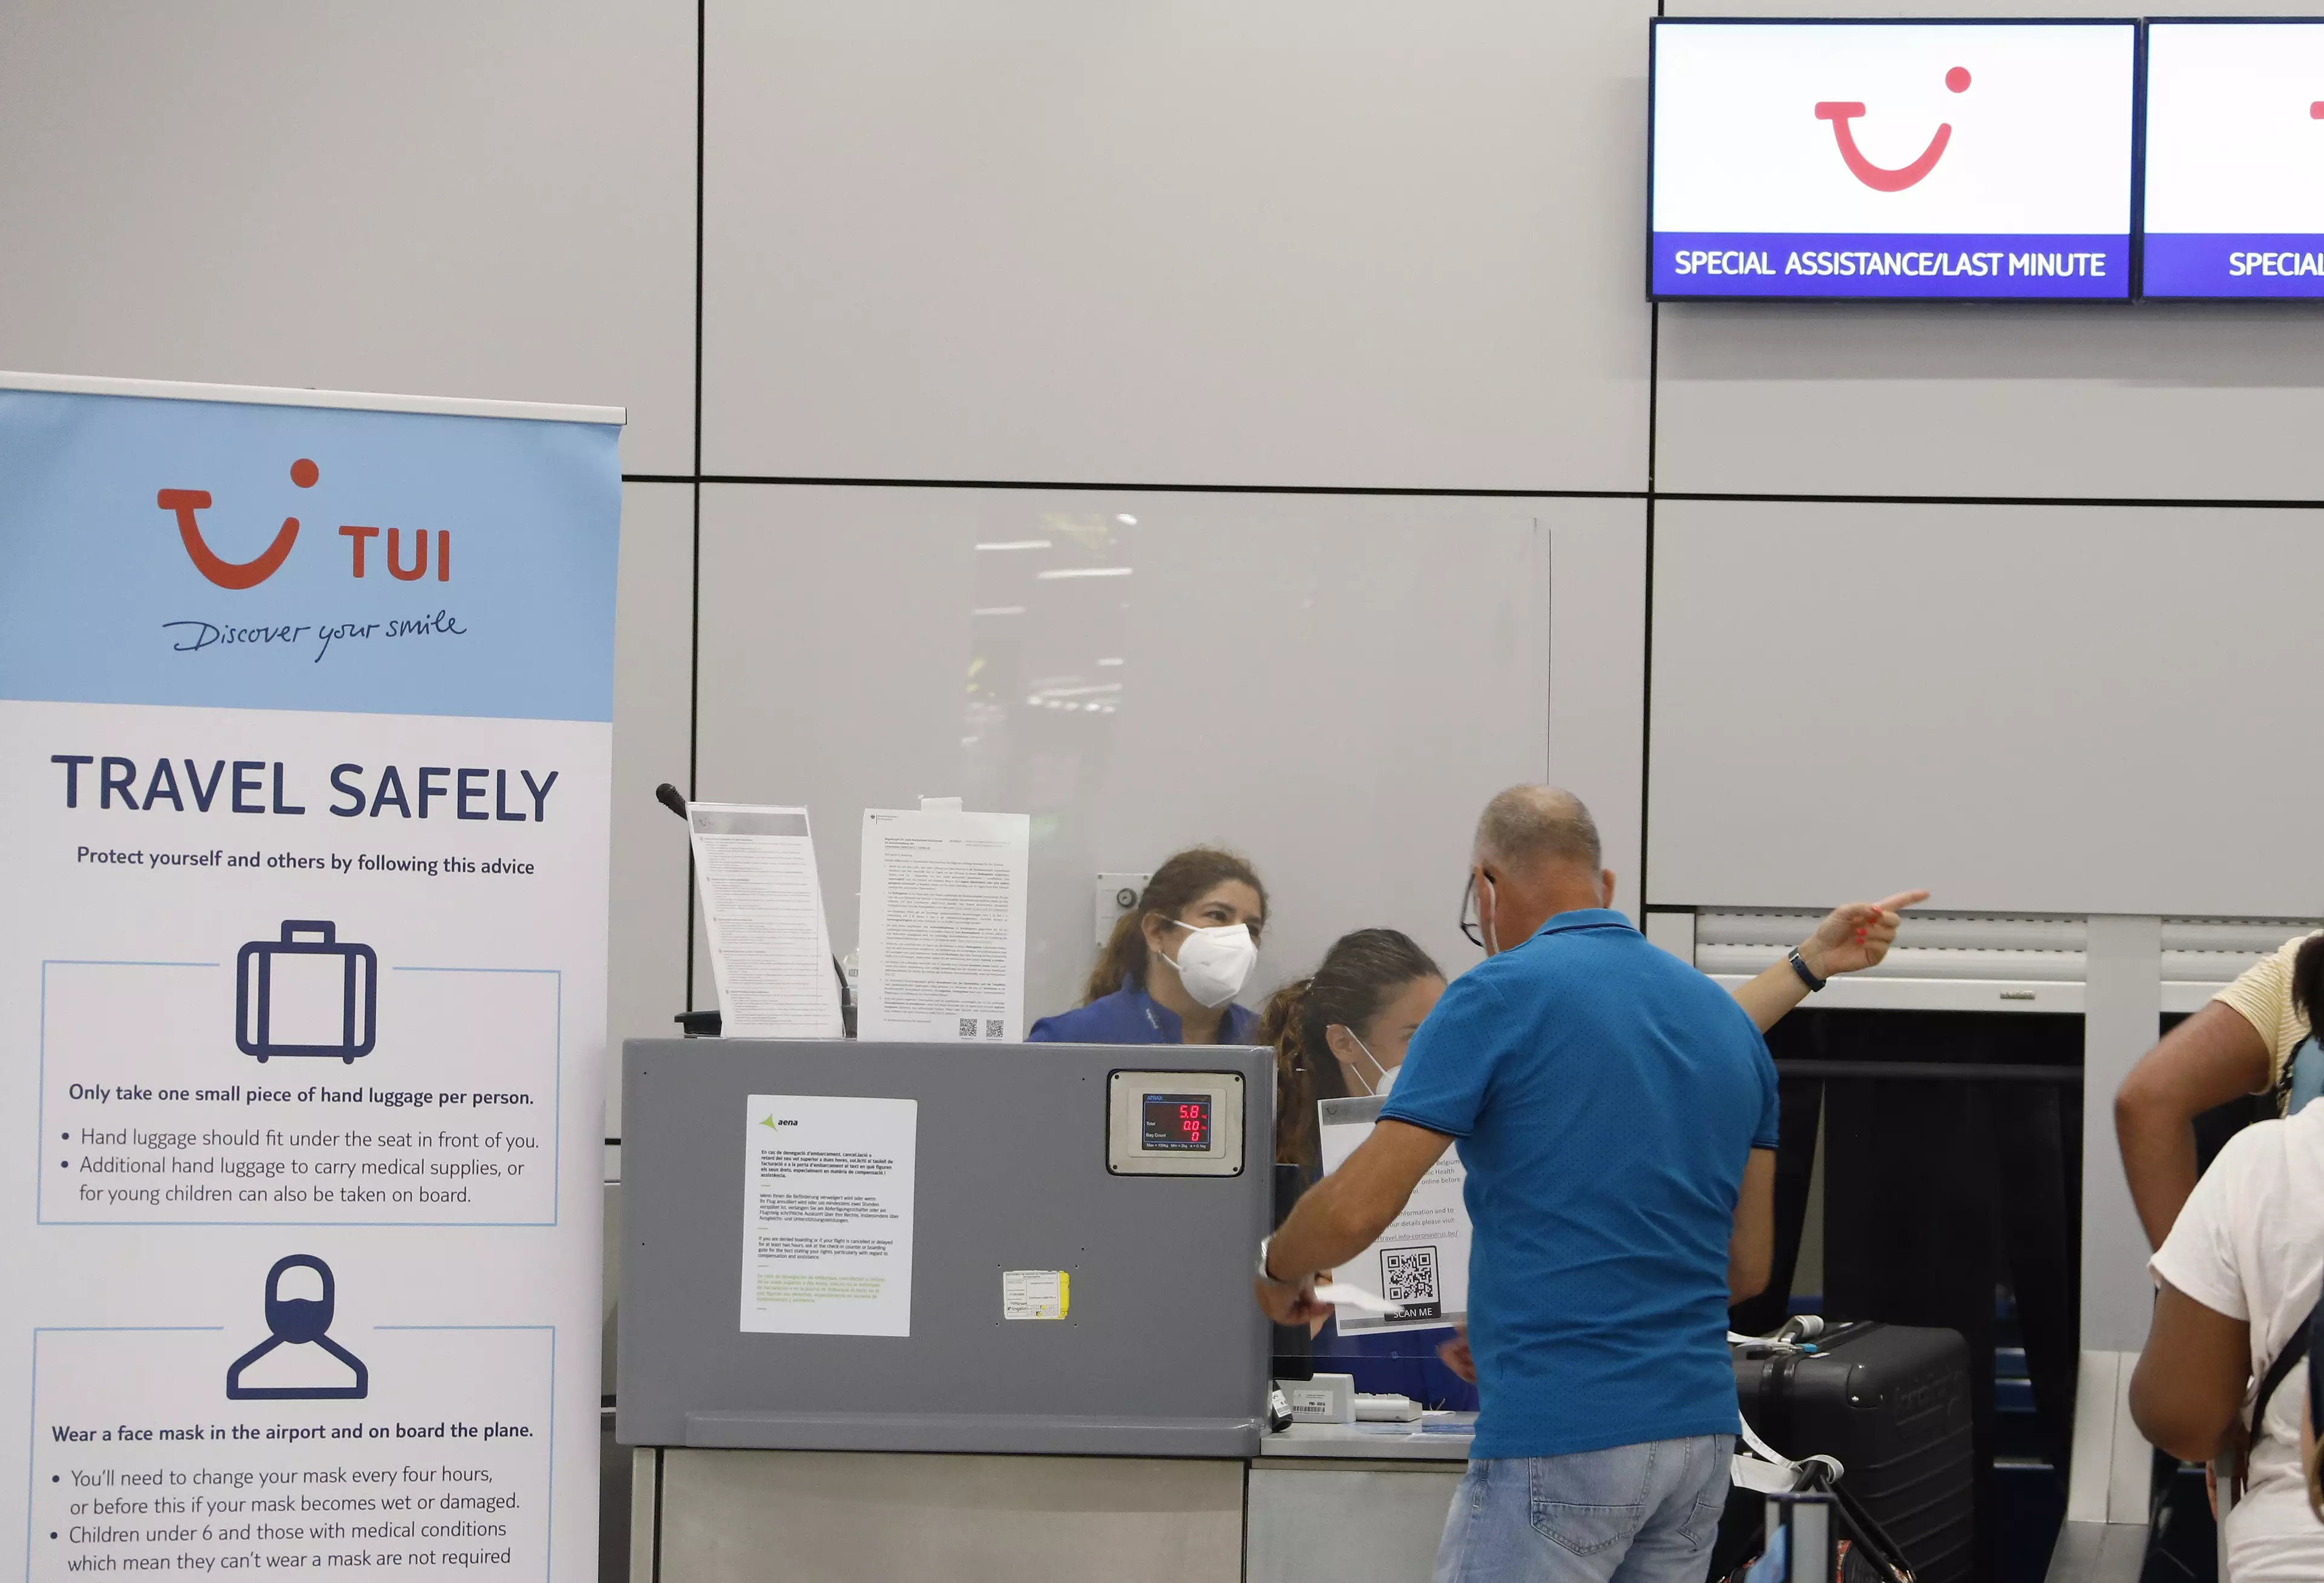 Seven people on the flight tested positive for coronavirus.